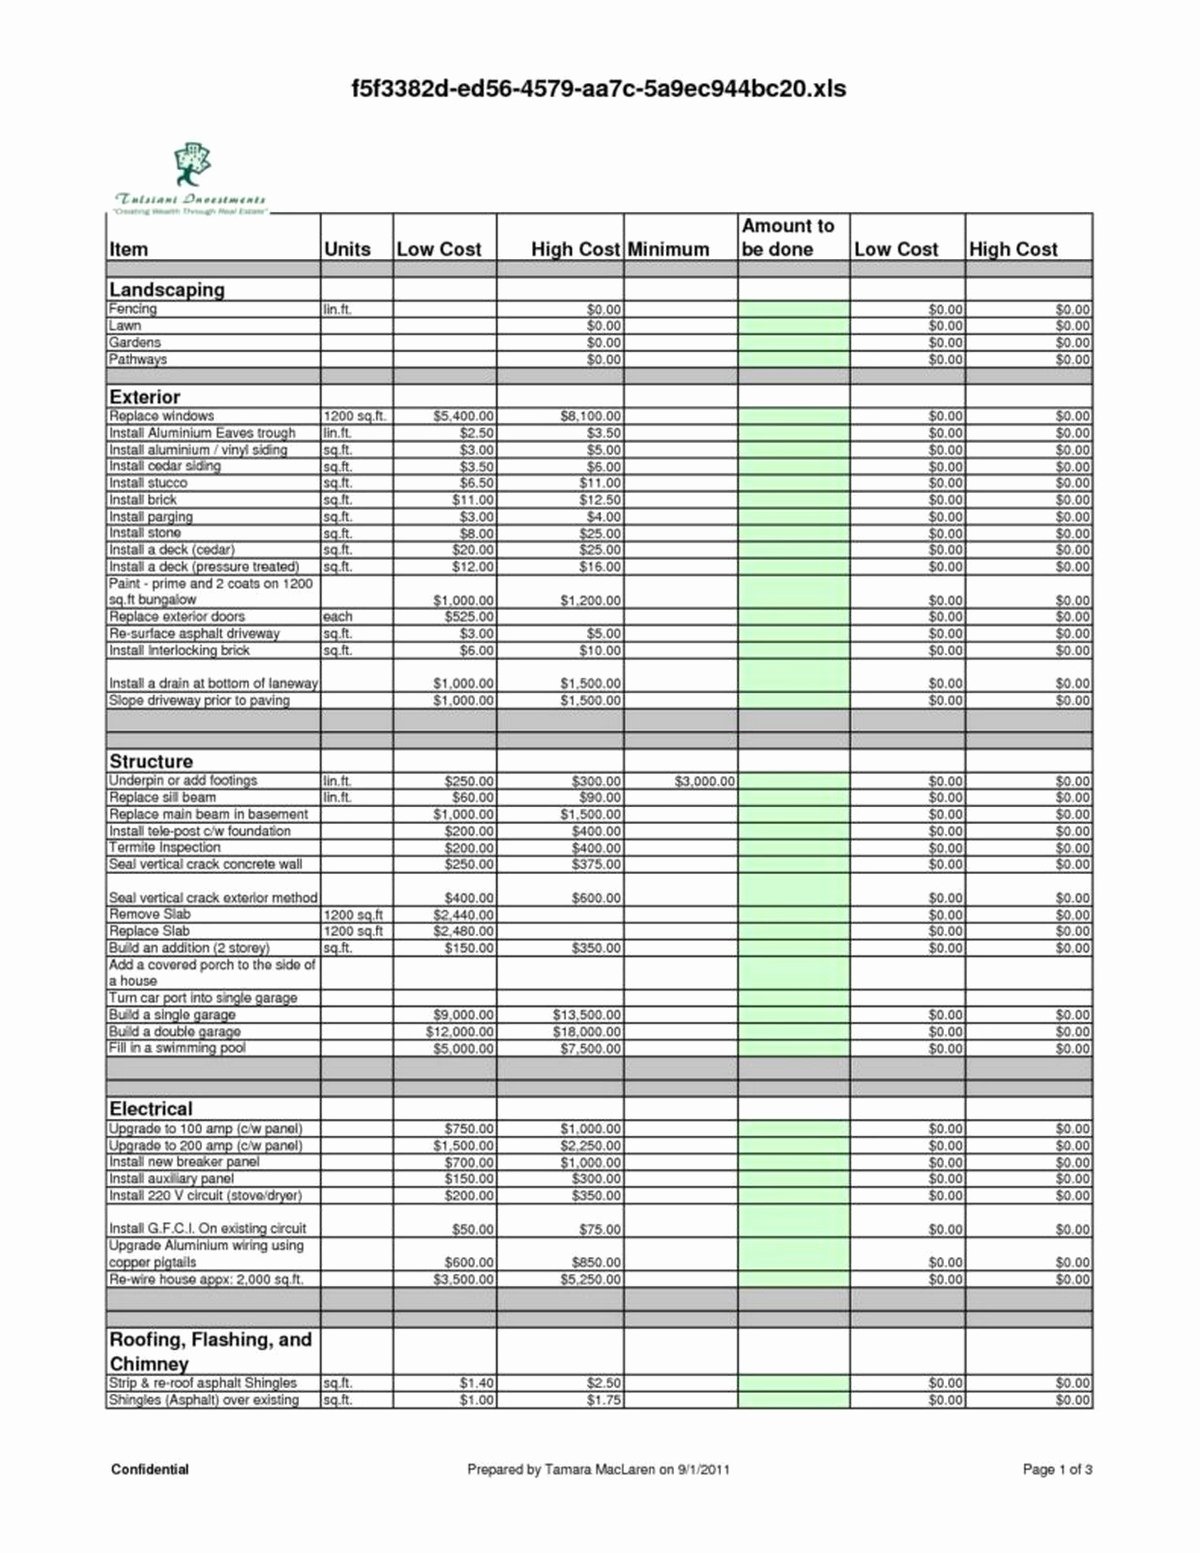 Construction Estimating Spreadsheet Template Inspirational Construction Cost Estimate Template Excel